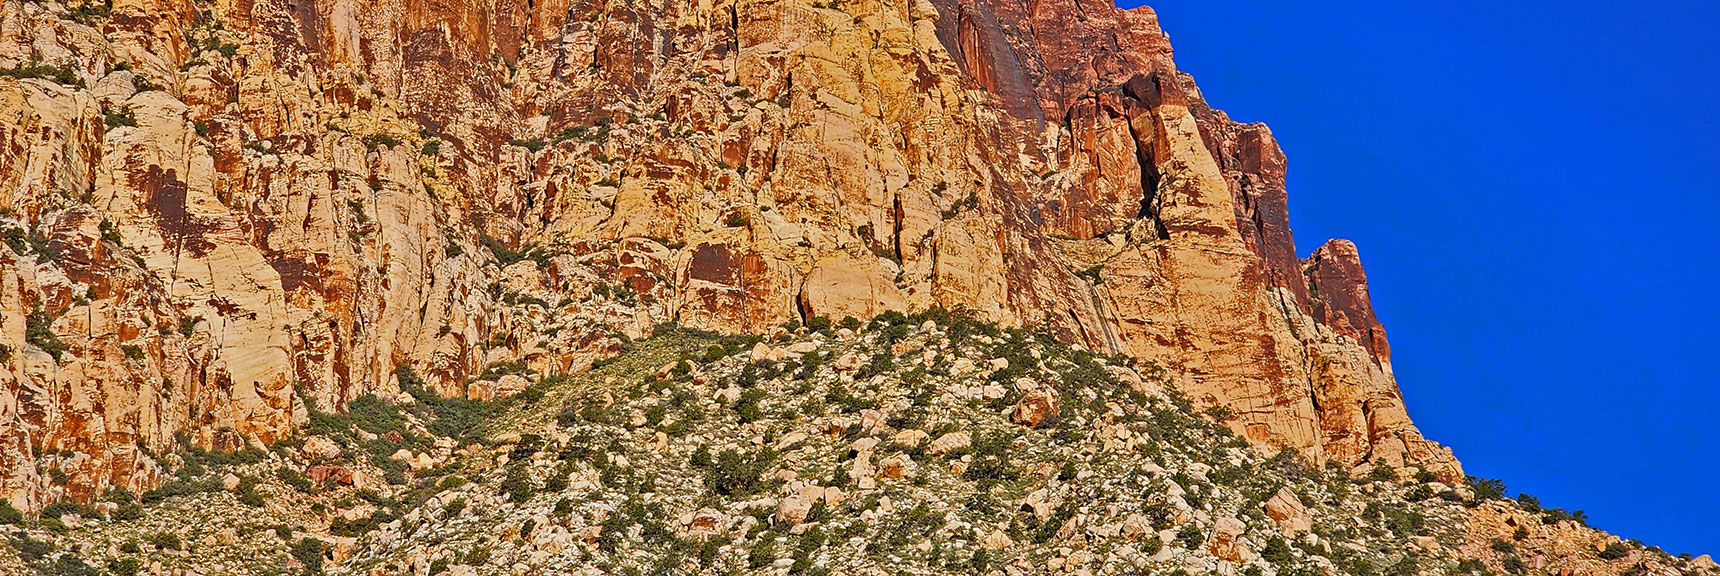 Eastern Base of Rainbow Mt. Popular Rock Climbing Destination | Knoll Trail | Red Rock Canyon National Conservation Area, Nevada | David Smith | LasVegasAreaTrails.com